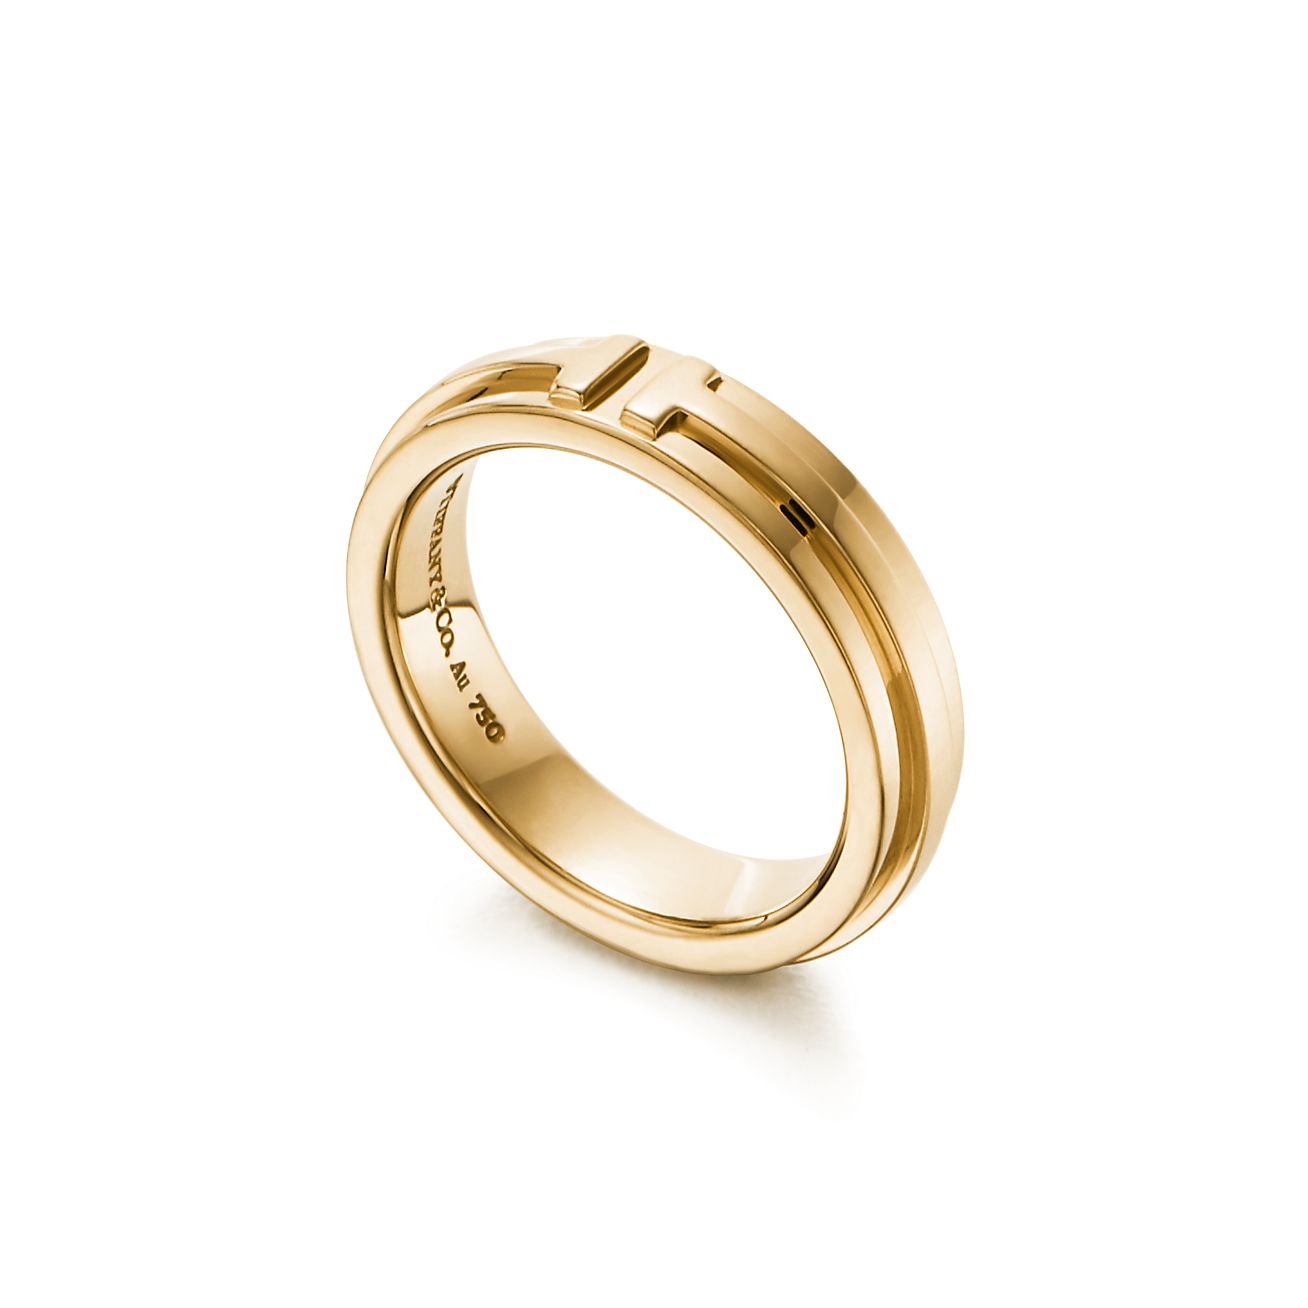 Tiffany T narrow ring in 18k gold, 4.5 